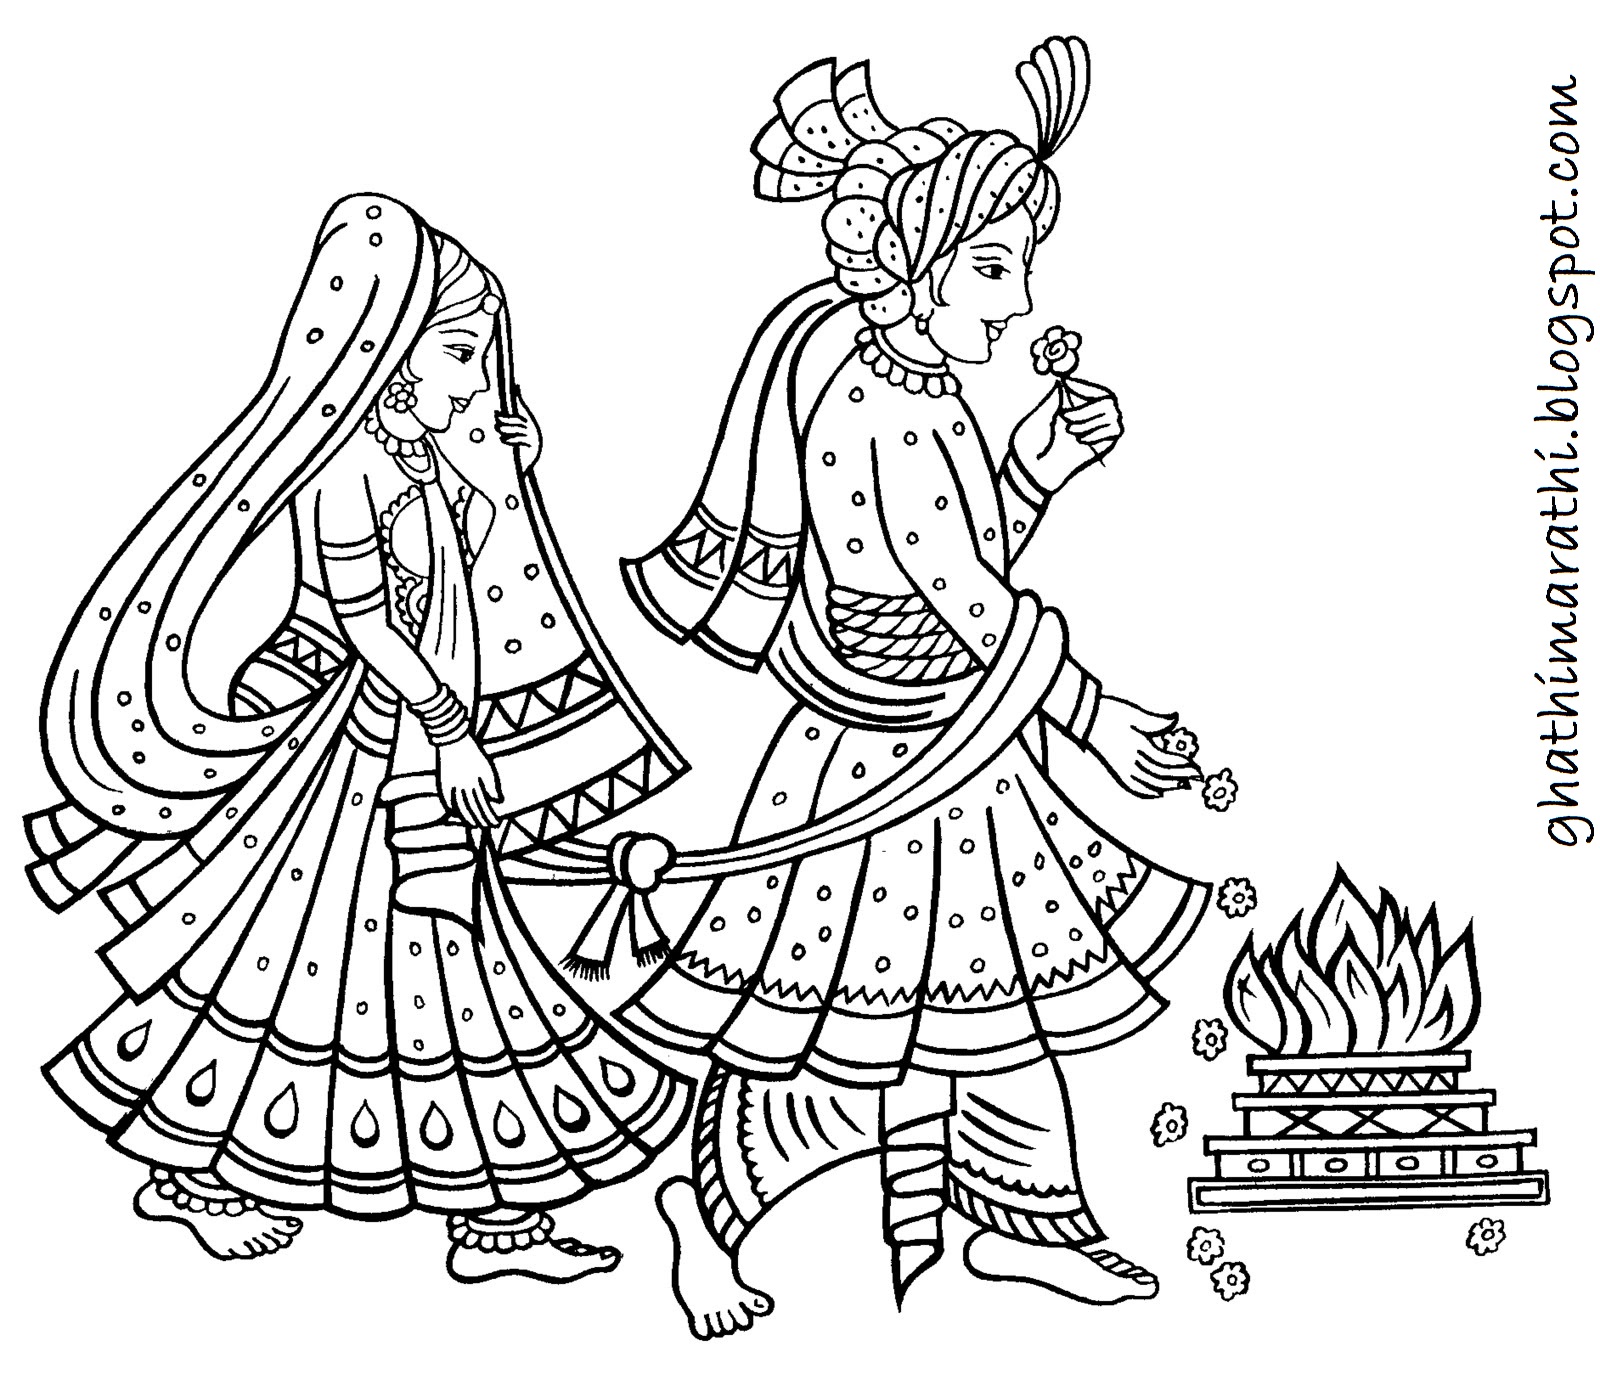 designs-of-marathi-lagna-patrika-for-marathi-wedding-ghathimarathi-all-marathi-stuff-in